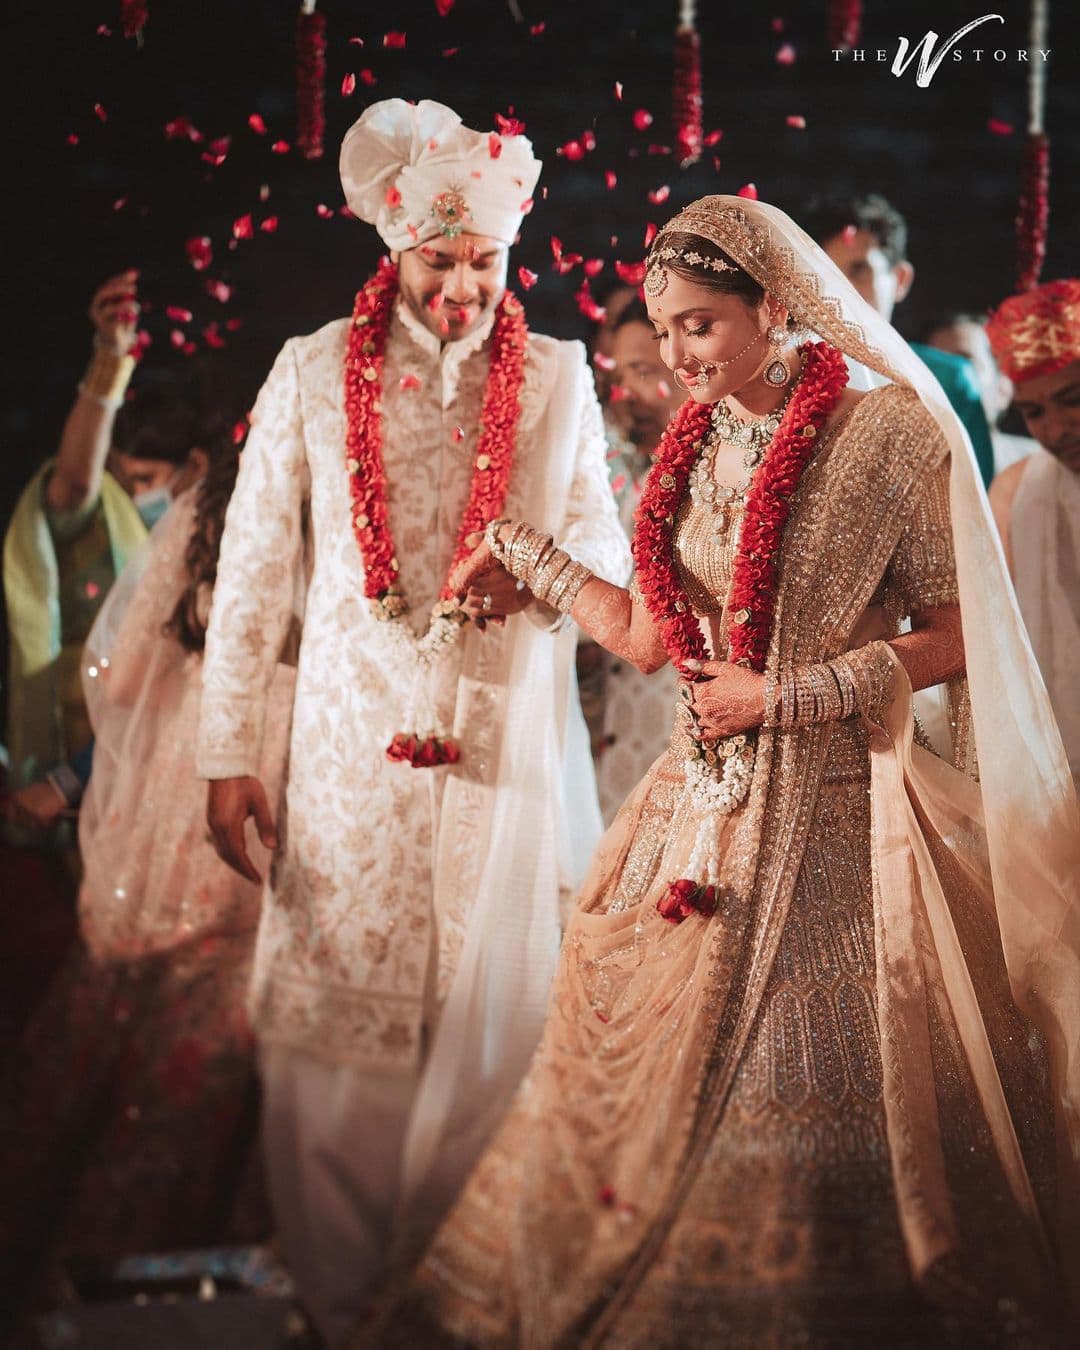 Ankita Lokhande made the happiest bride